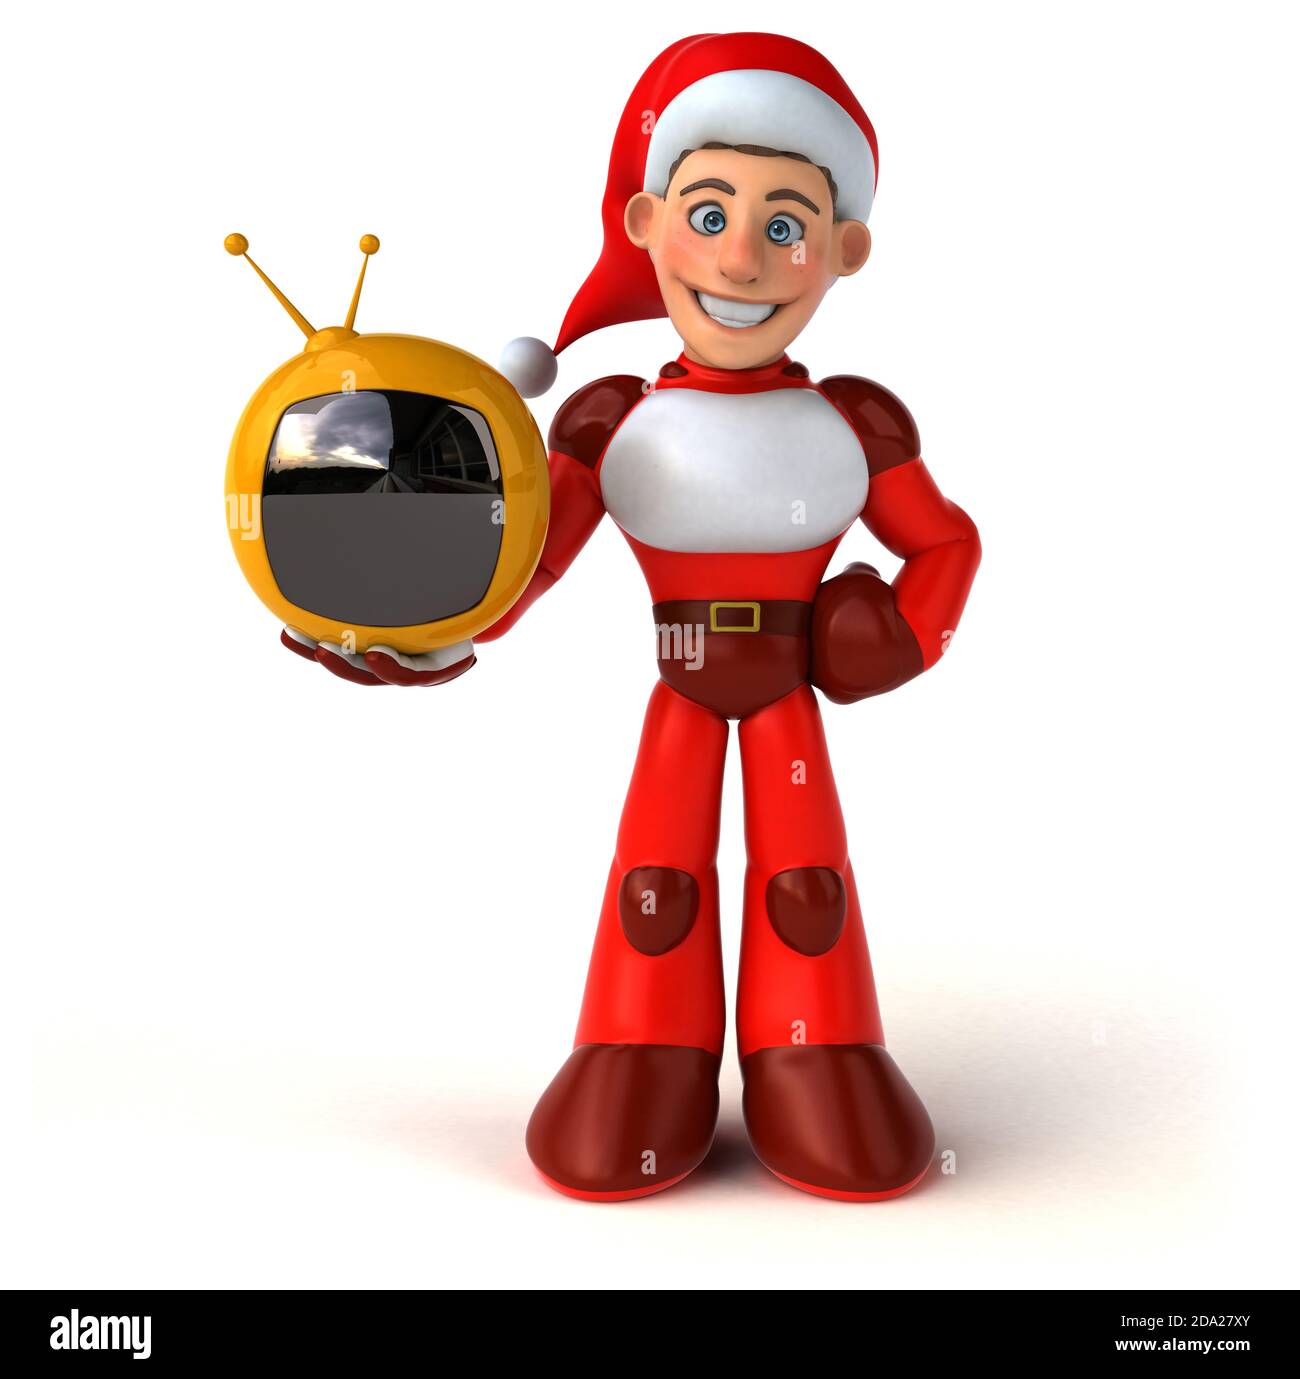 Fun Super Santa Claus - 3D Illustration Stock Photo - Alamy